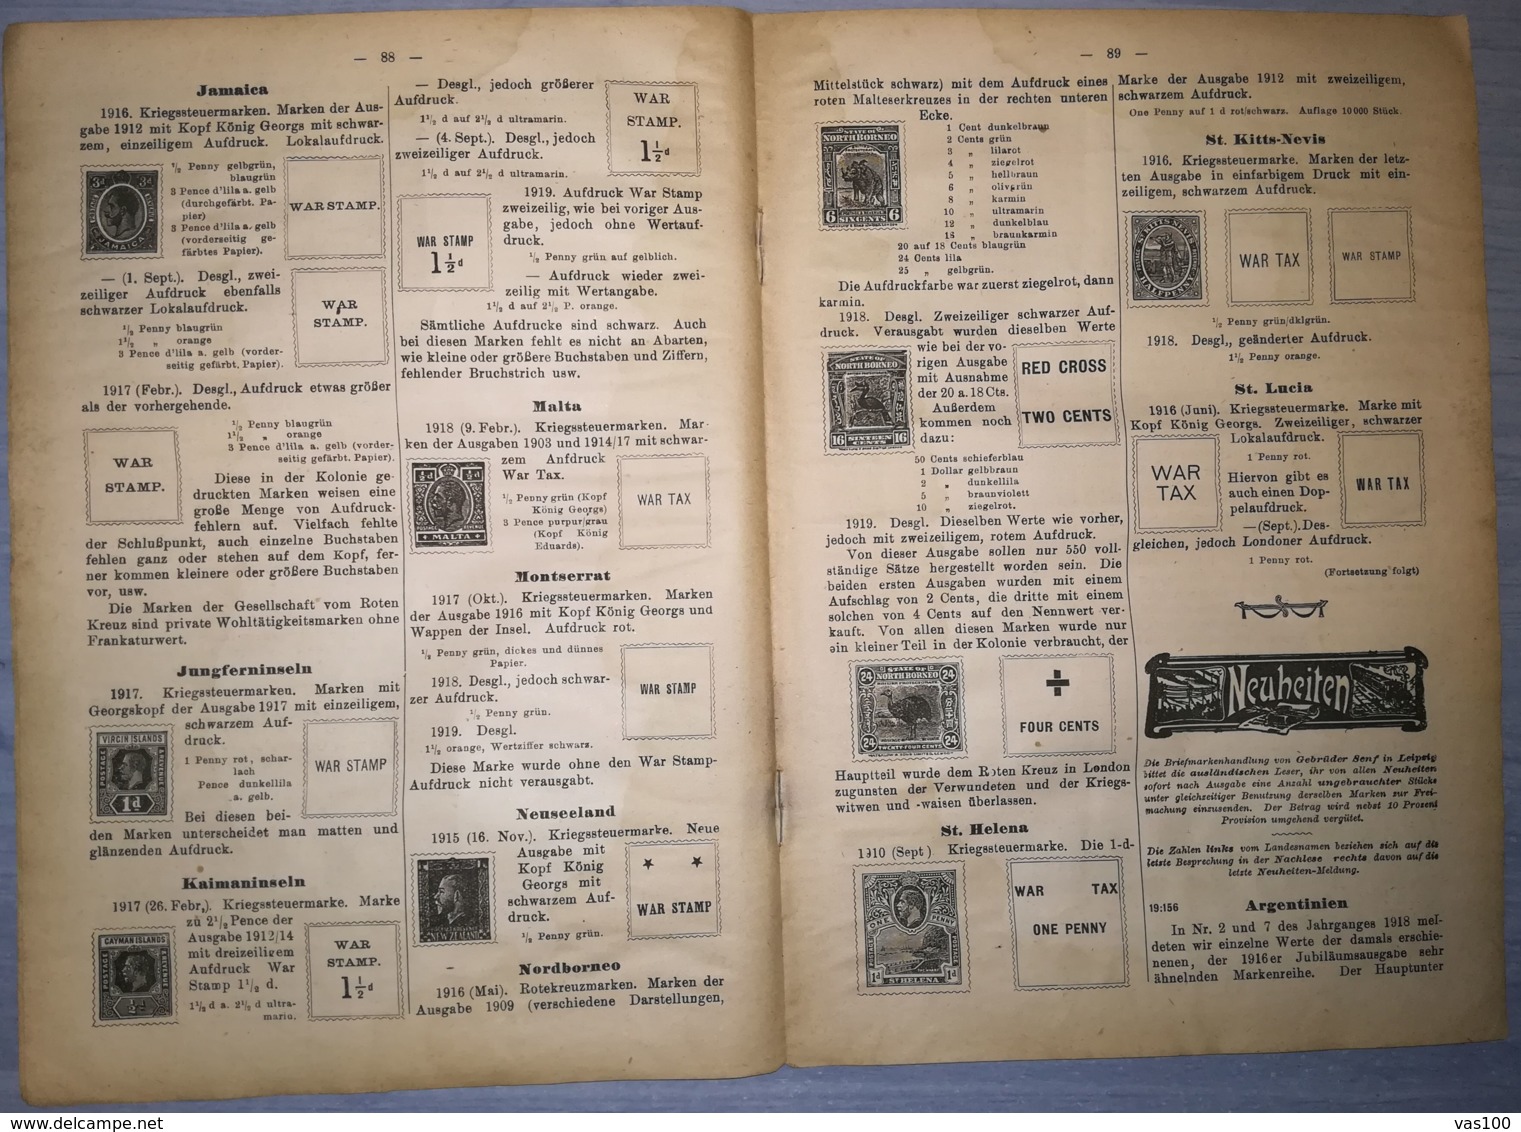 ILLUSTRATED STAMPS JOURNAL- ILLUSTRIERTES BRIEFMARKEN JOURNAL MAGAZINE, LEIPZIG, NR 6, APRIL 1920, GERMANY - Allemand (jusque 1940)